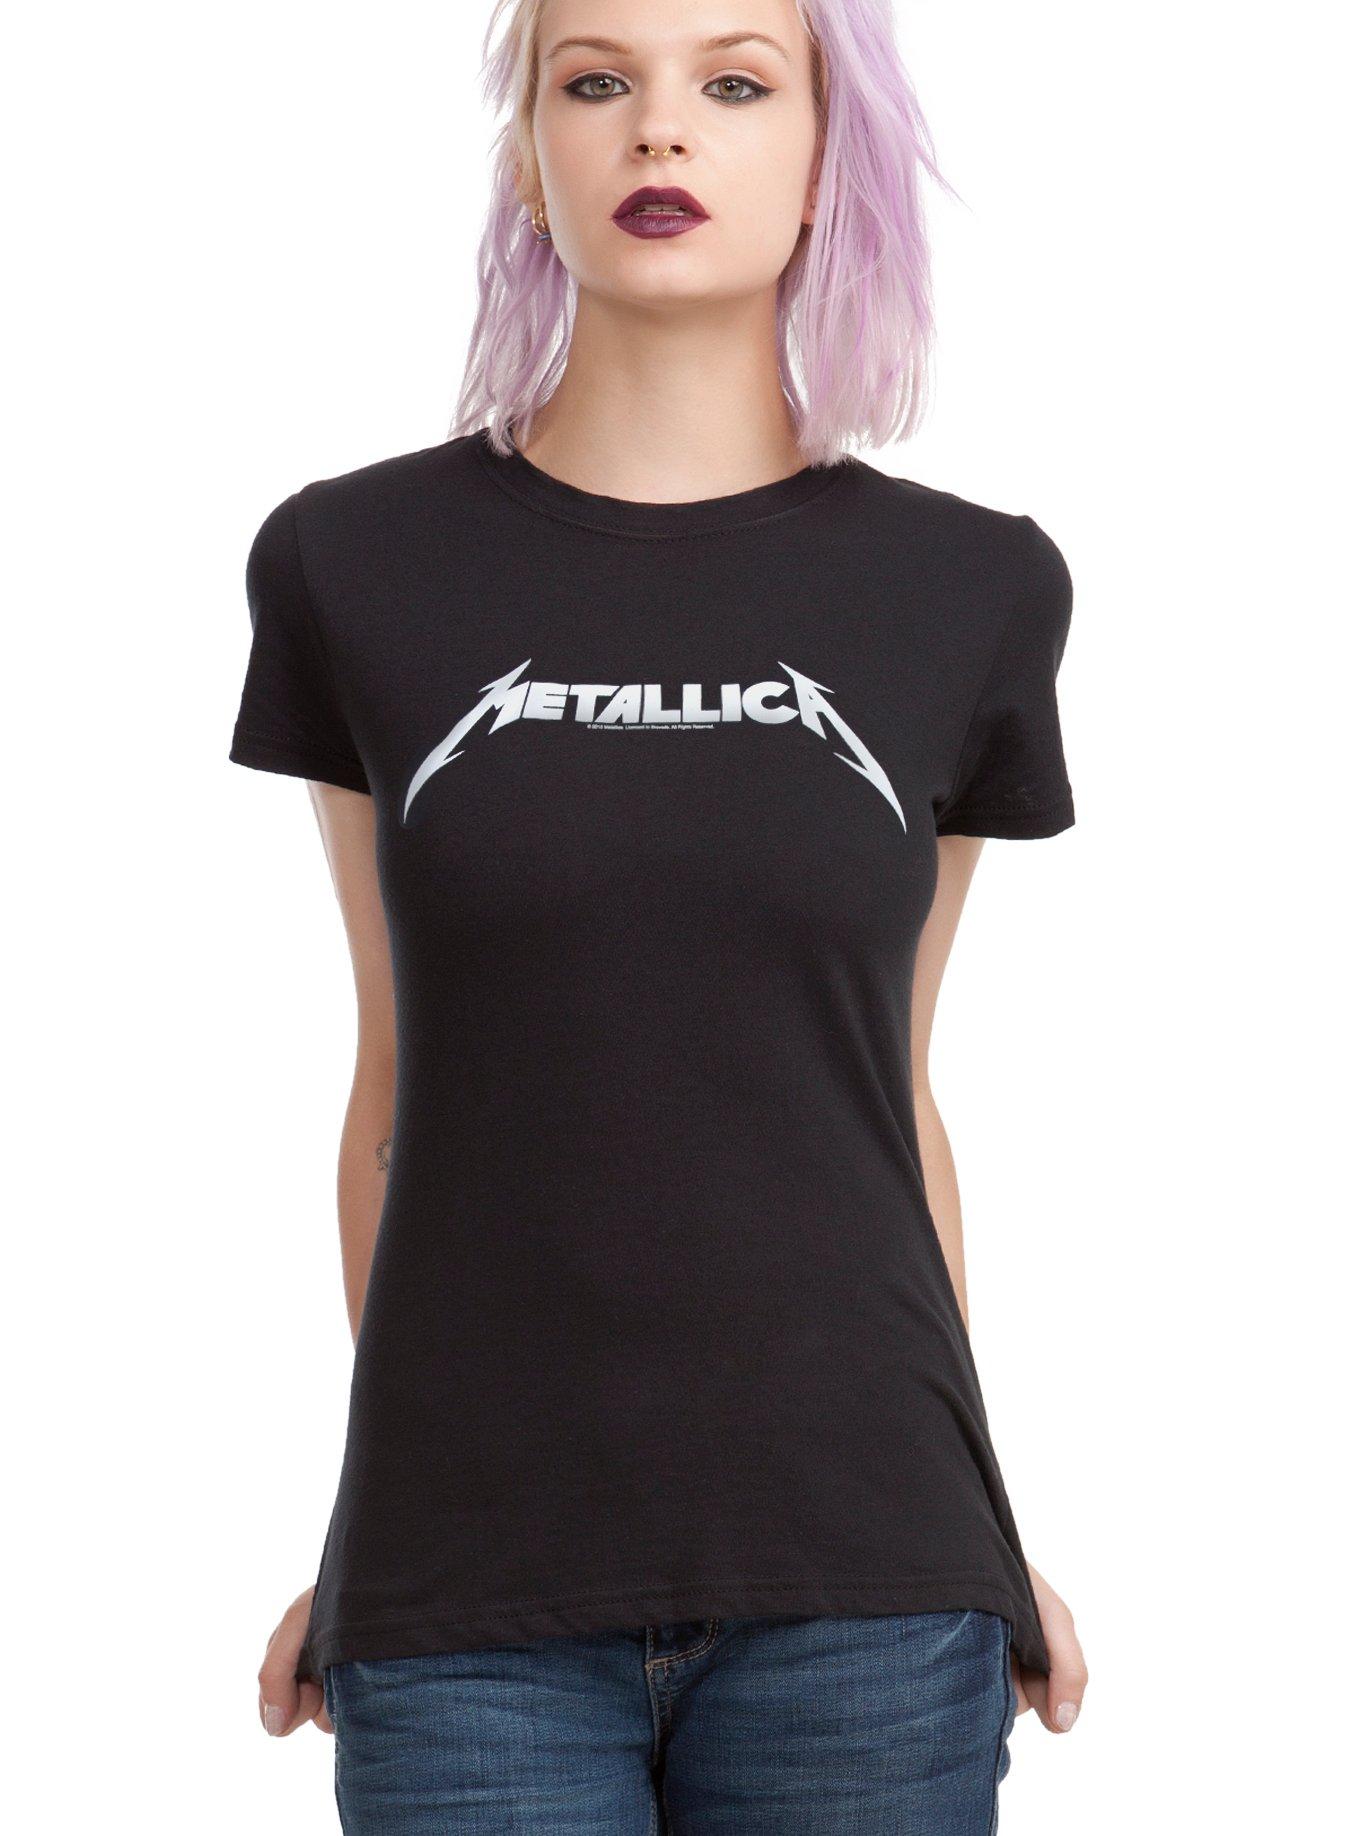 Metallica Logo Girls T-Shirt | Hot Topic